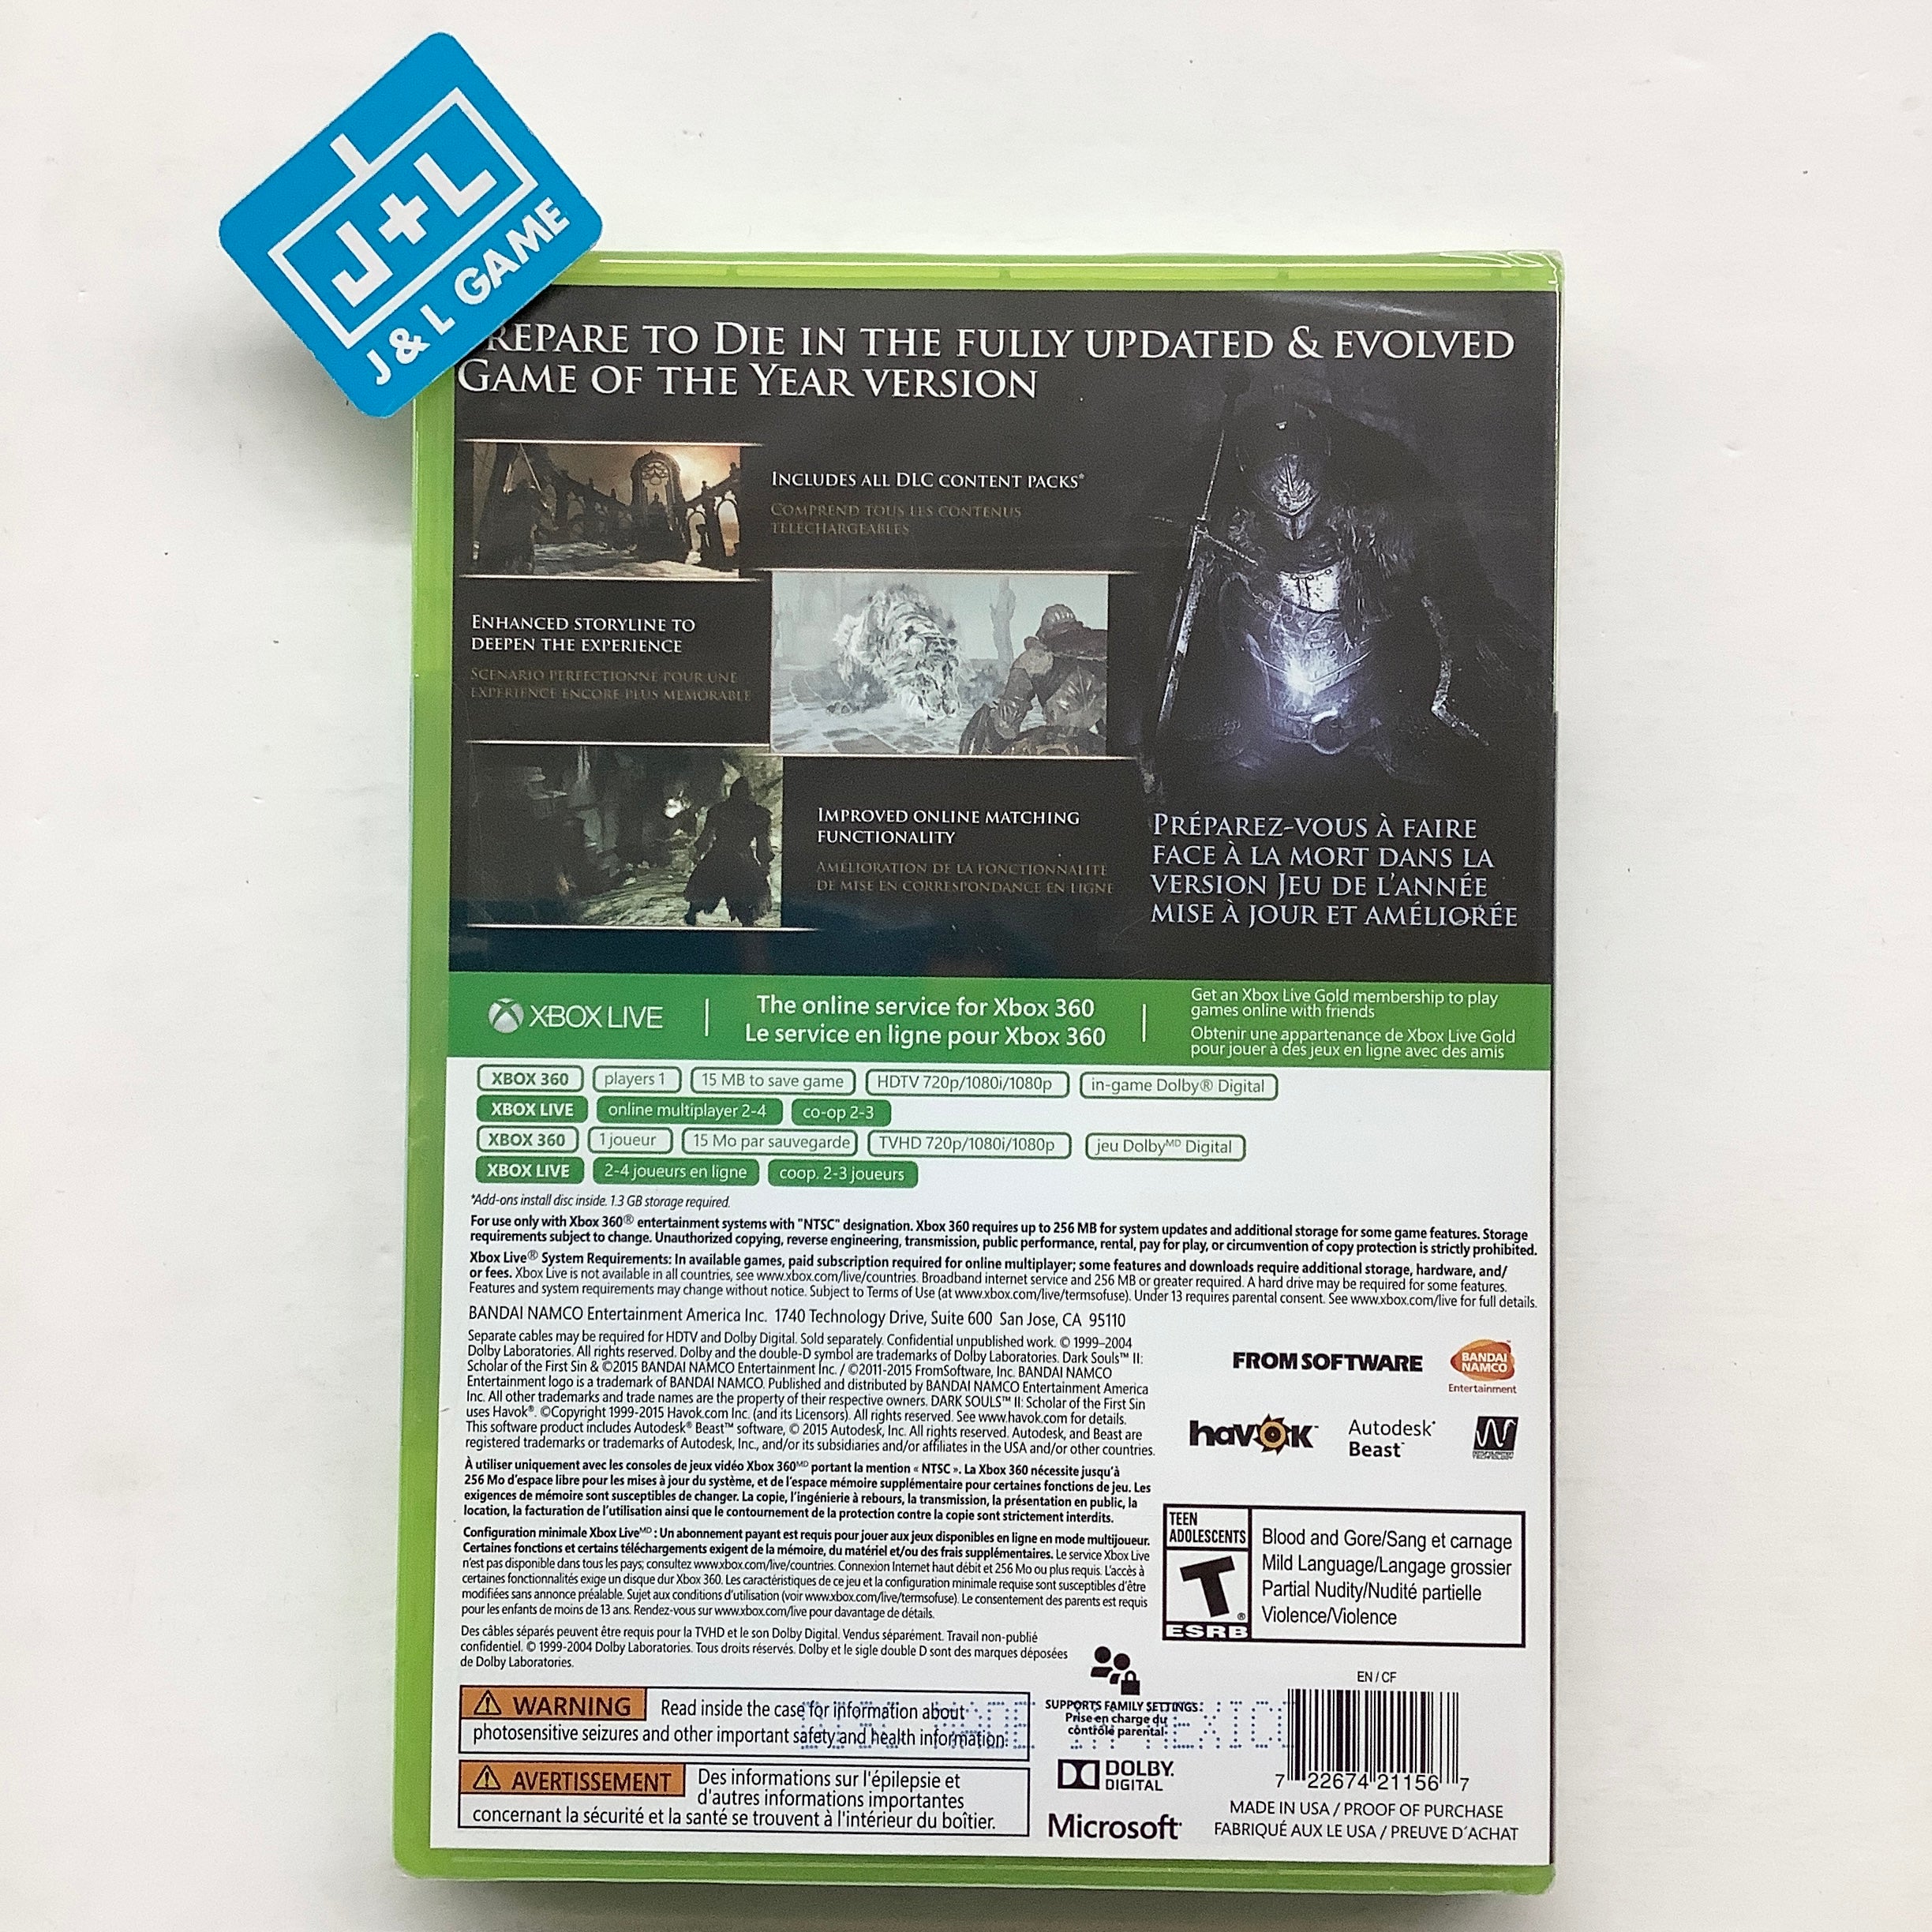 Dark Souls II: Scholar of the First Sin - Xbox 360 Video Games Bandai Namco Games   